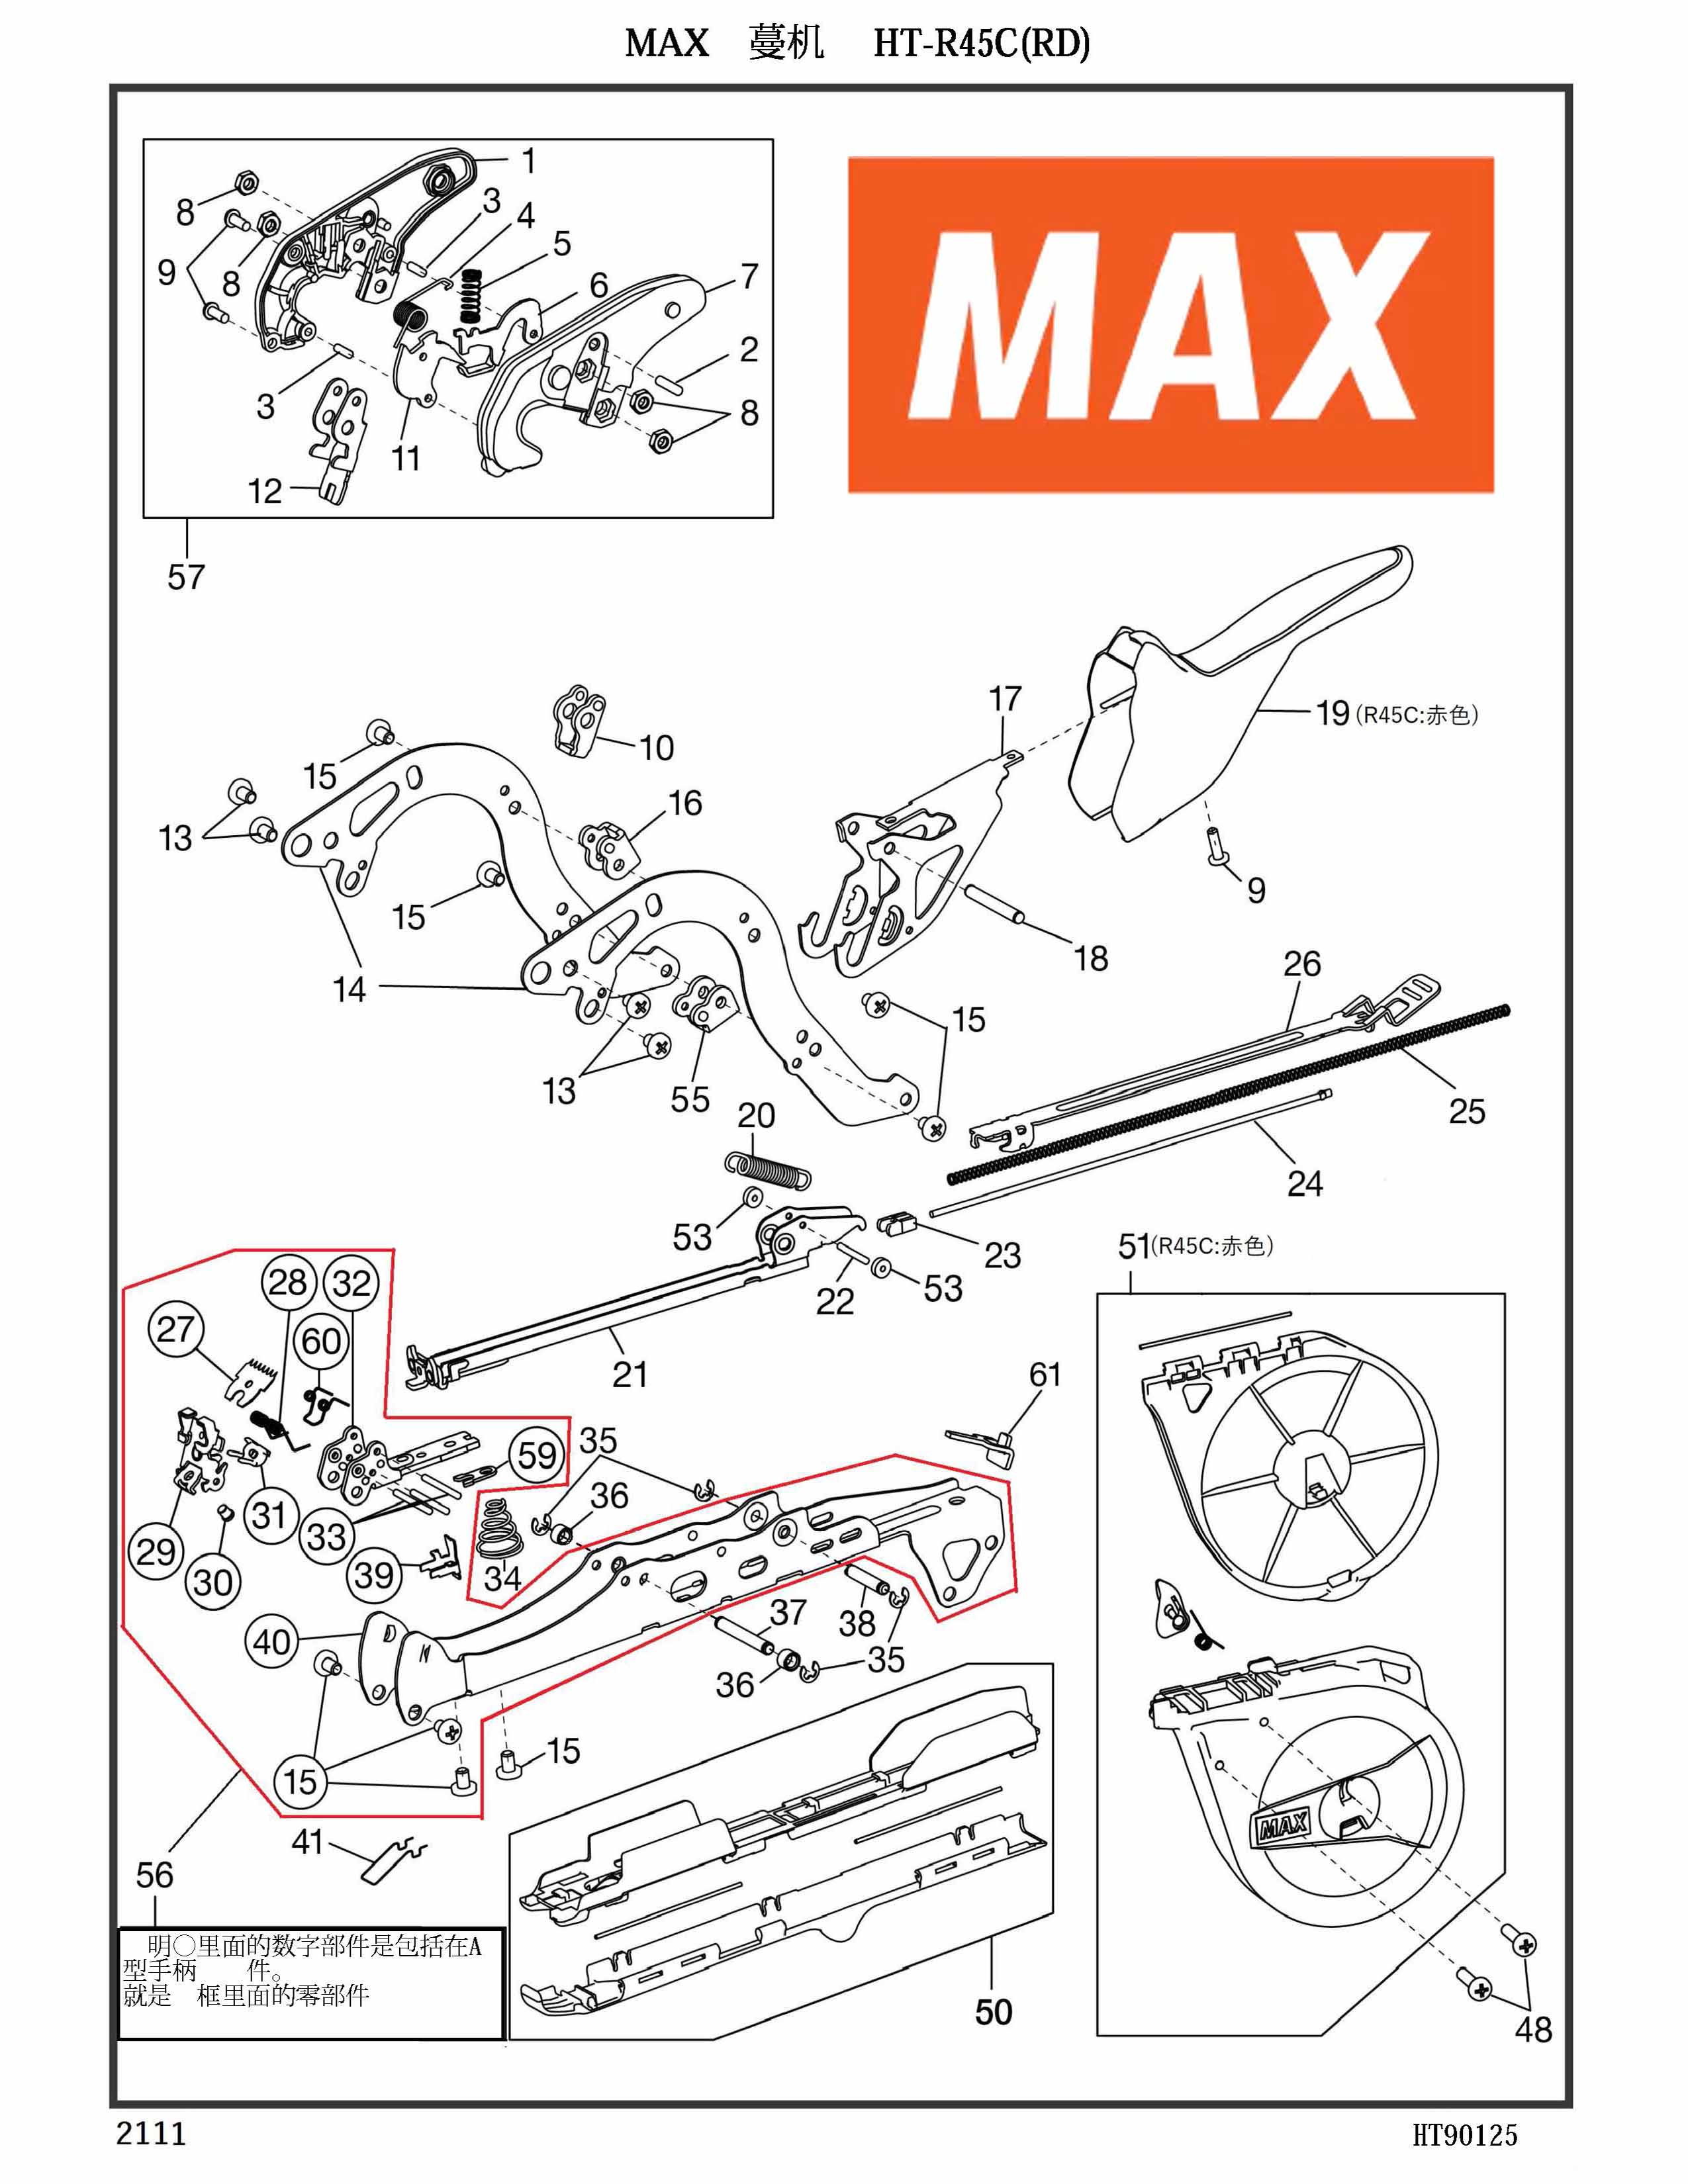 MAX Tapener Part FF31714 STRAIGHT PIN 1714(HT-R) Fits MAX HT-R45L(O) R45C(RD) HT-R1 HT-R2 #2